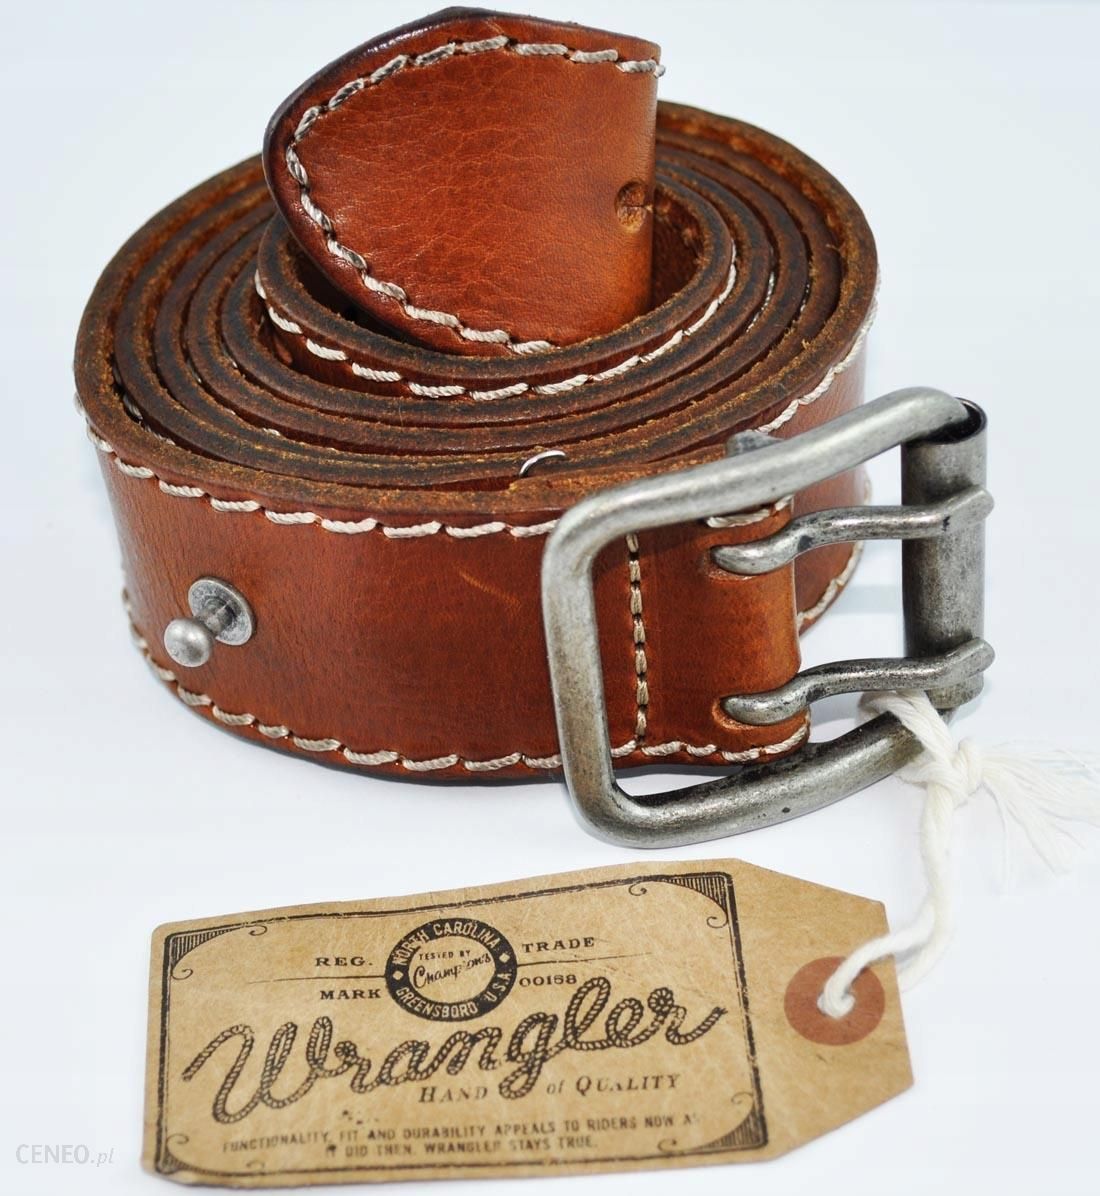 Ceny Wrangler opinie Belt - Pin i skórzany Stitched 110 pasek